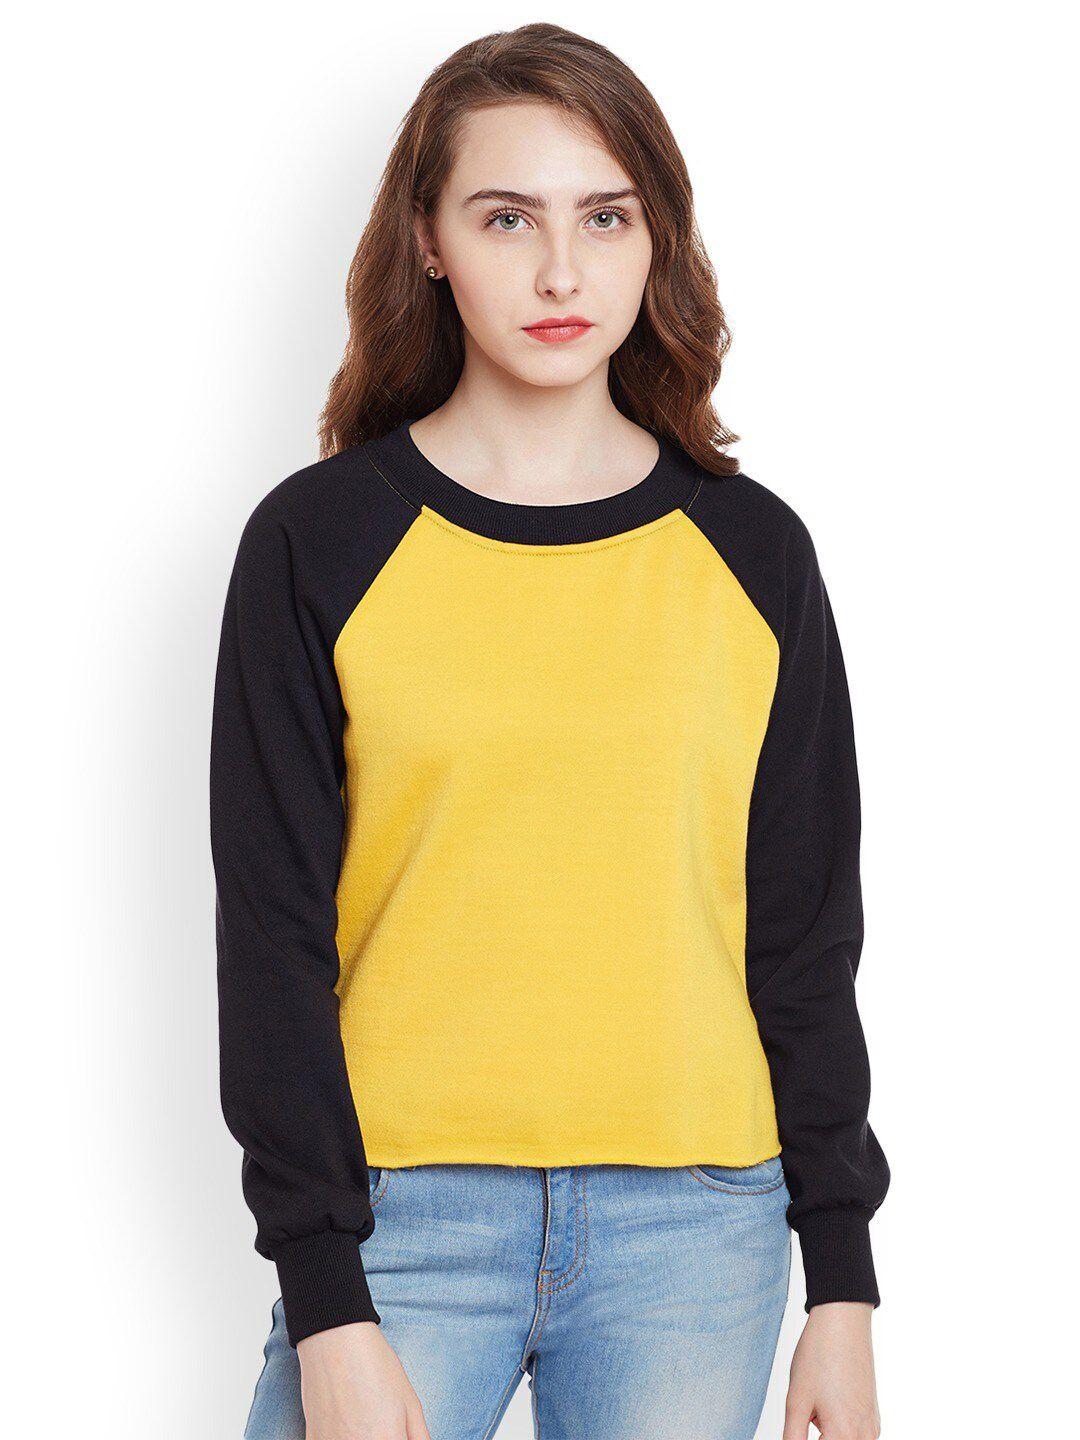 baesd-women-yellow-sweatshirt